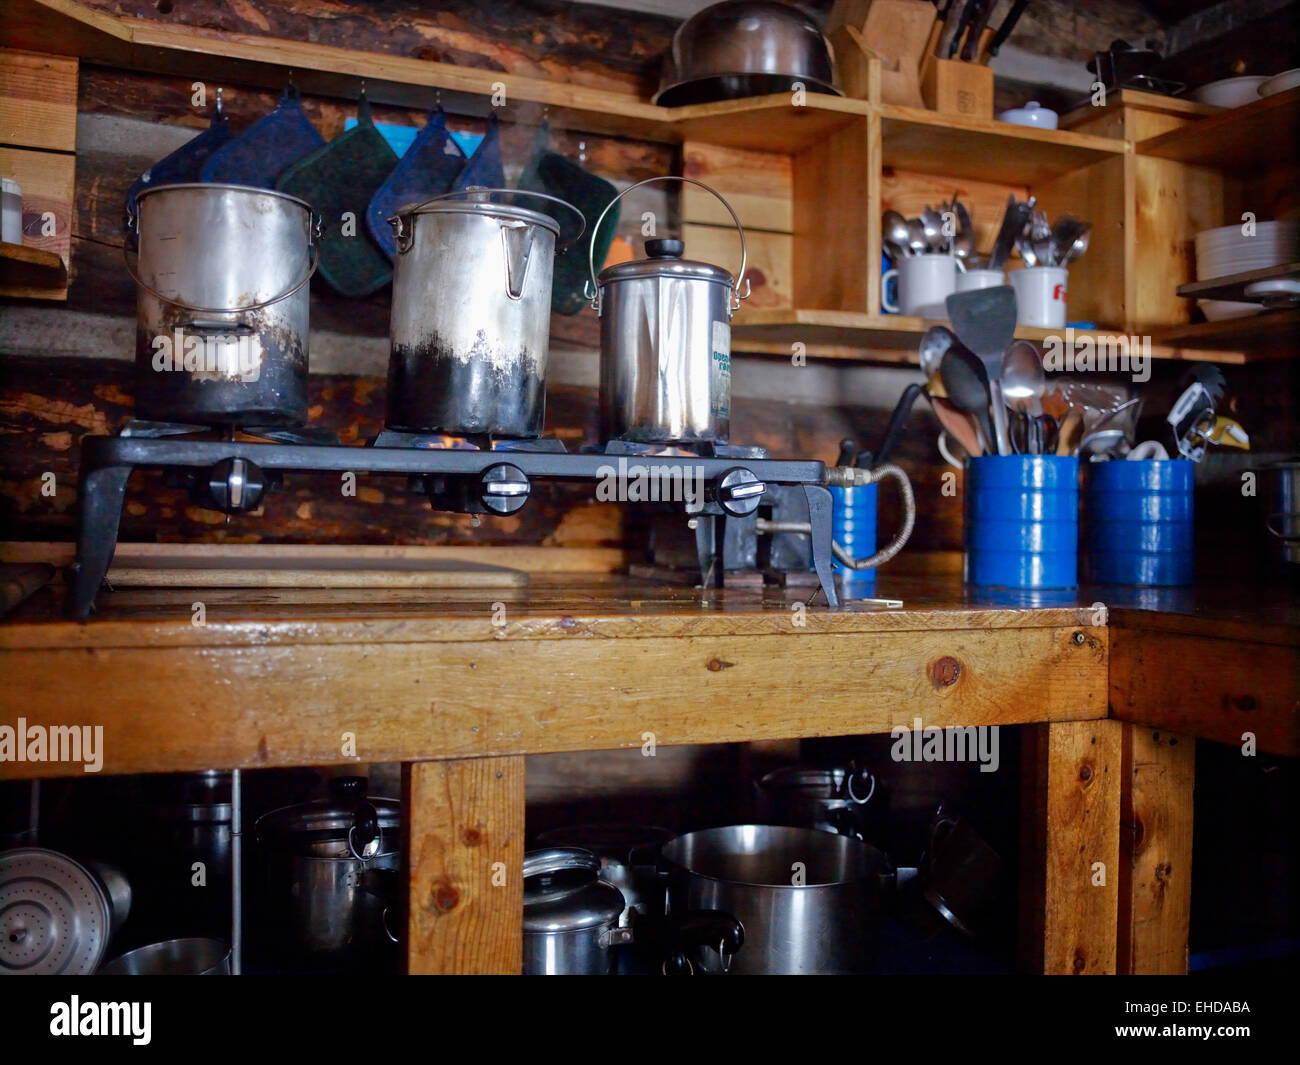 Gas stove in kitchen, Margy's Hut interior, Aspen, Colorado Stock Photo